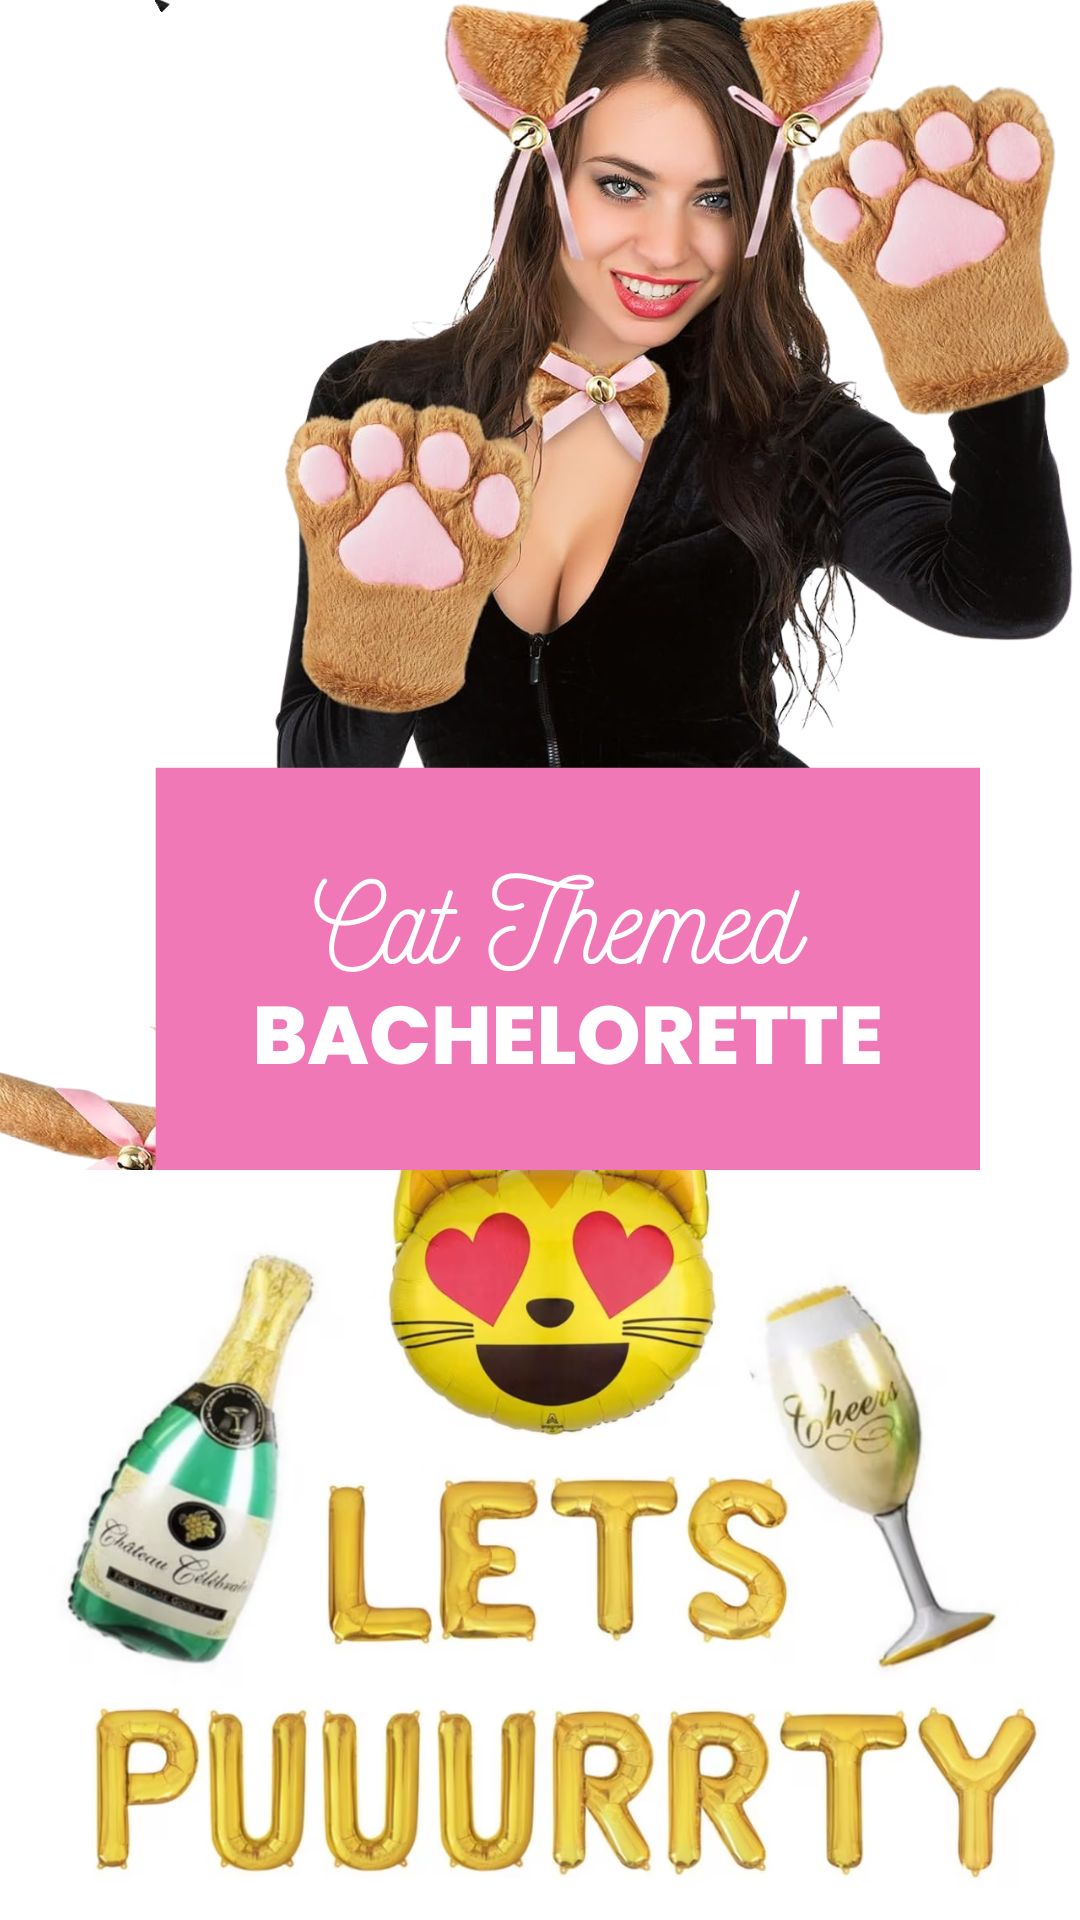 Cat Themed Bachelorette Party